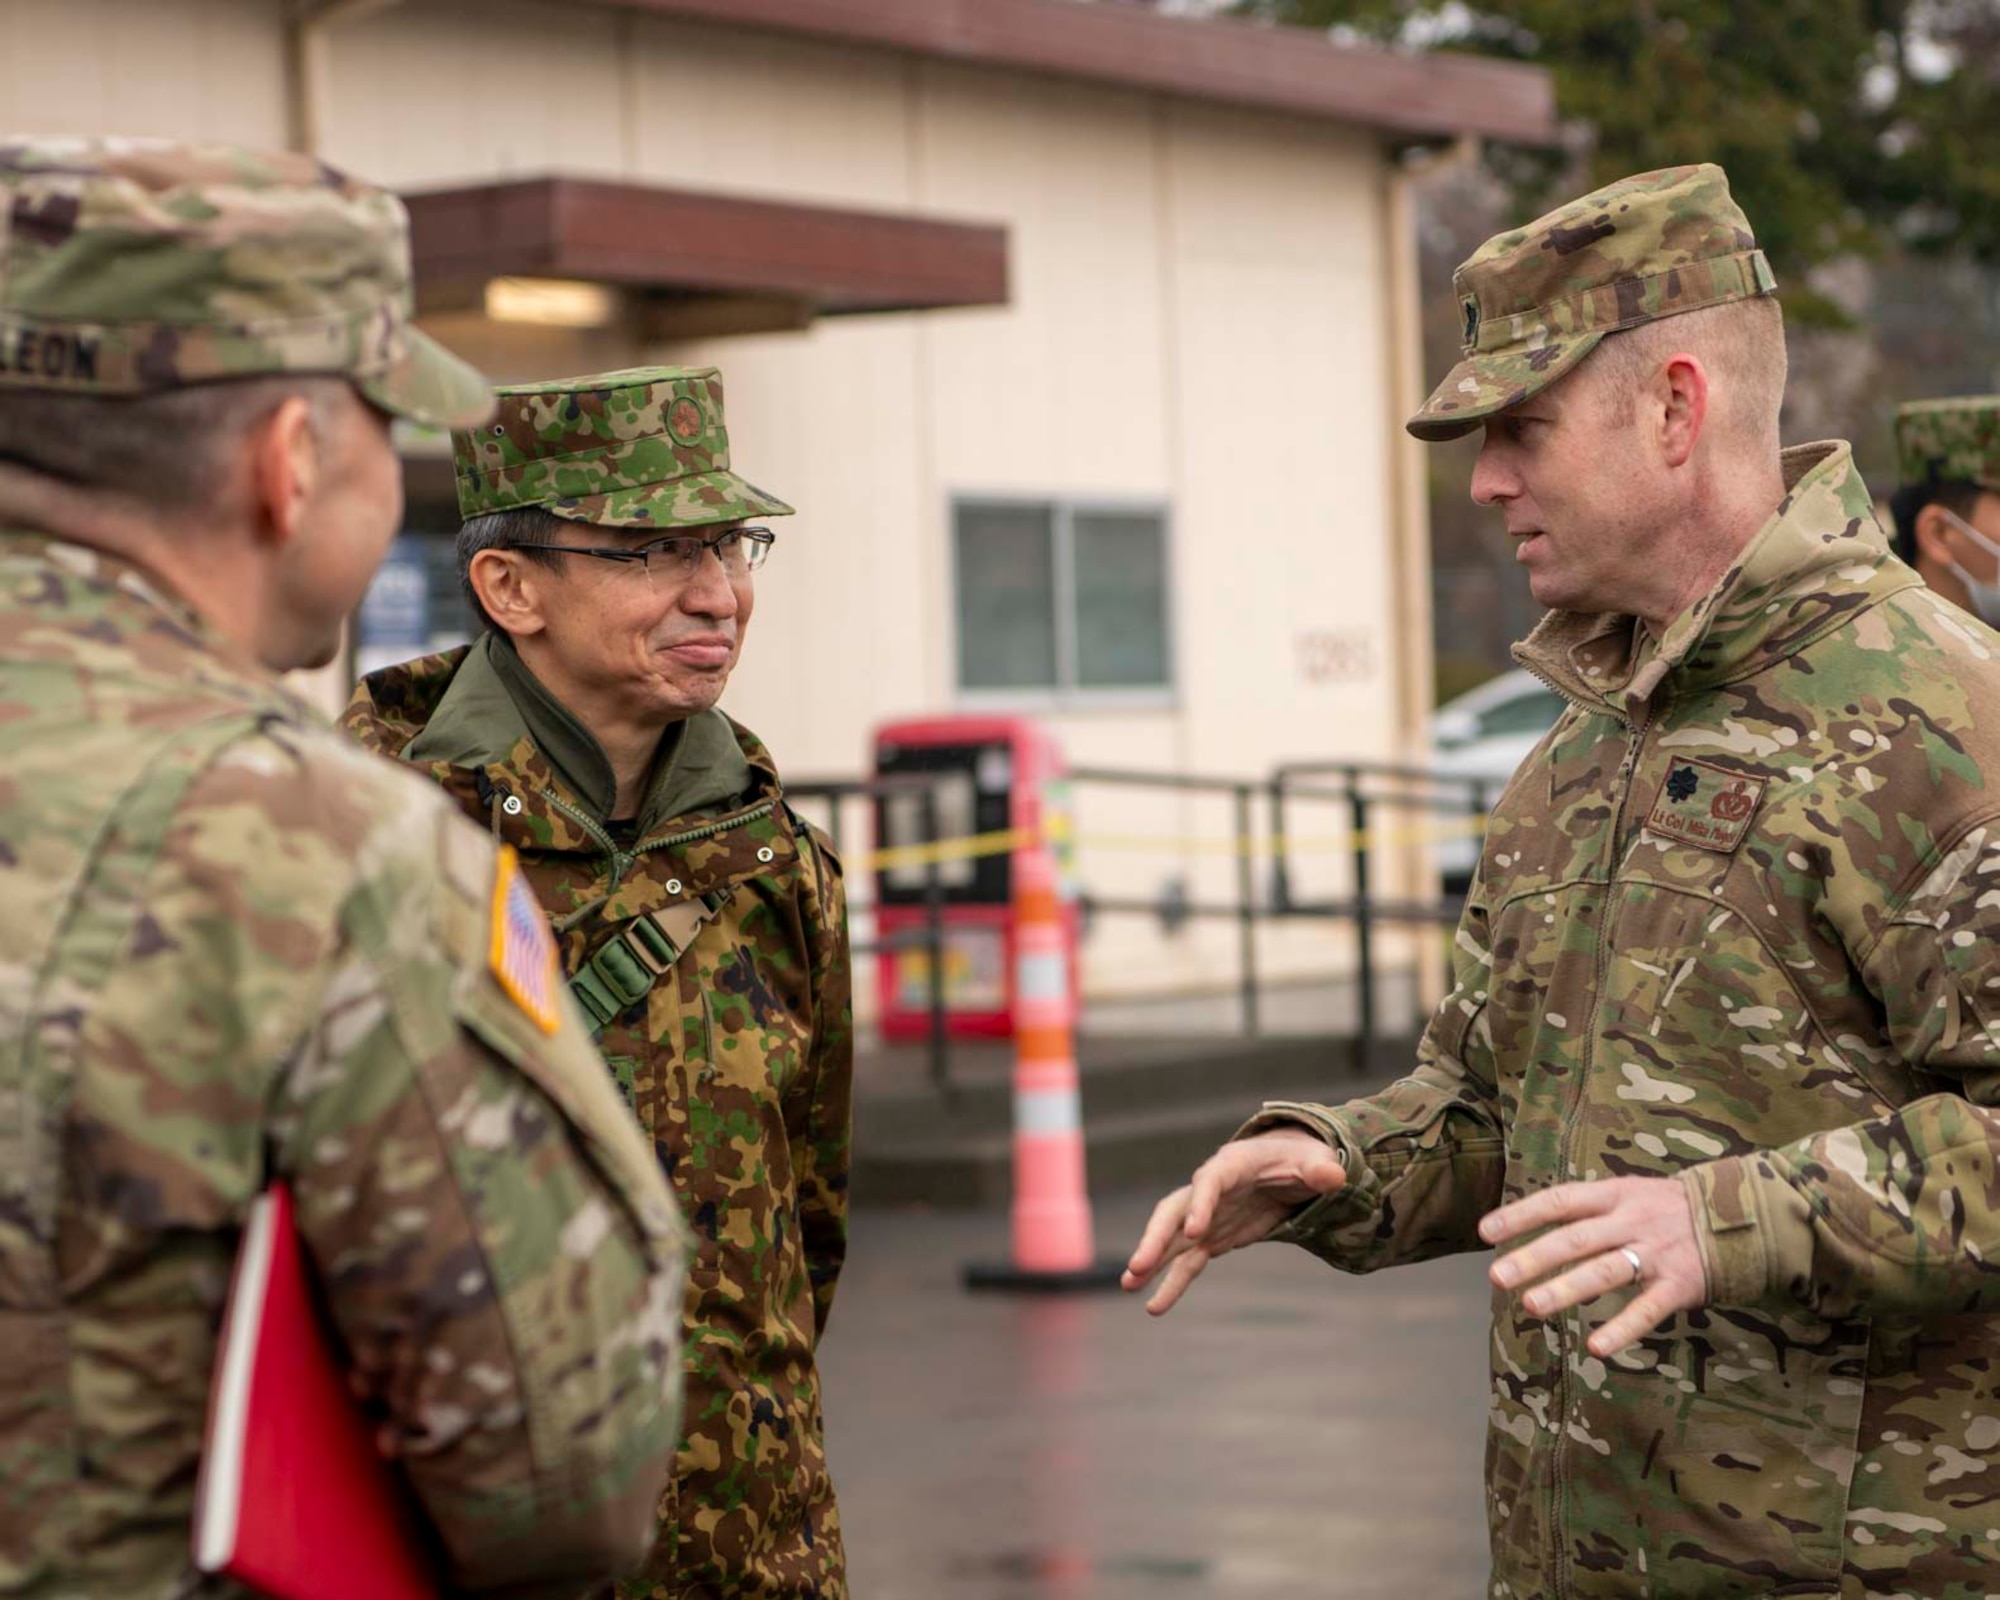 A Japanese military member speaks to U.S. military members.